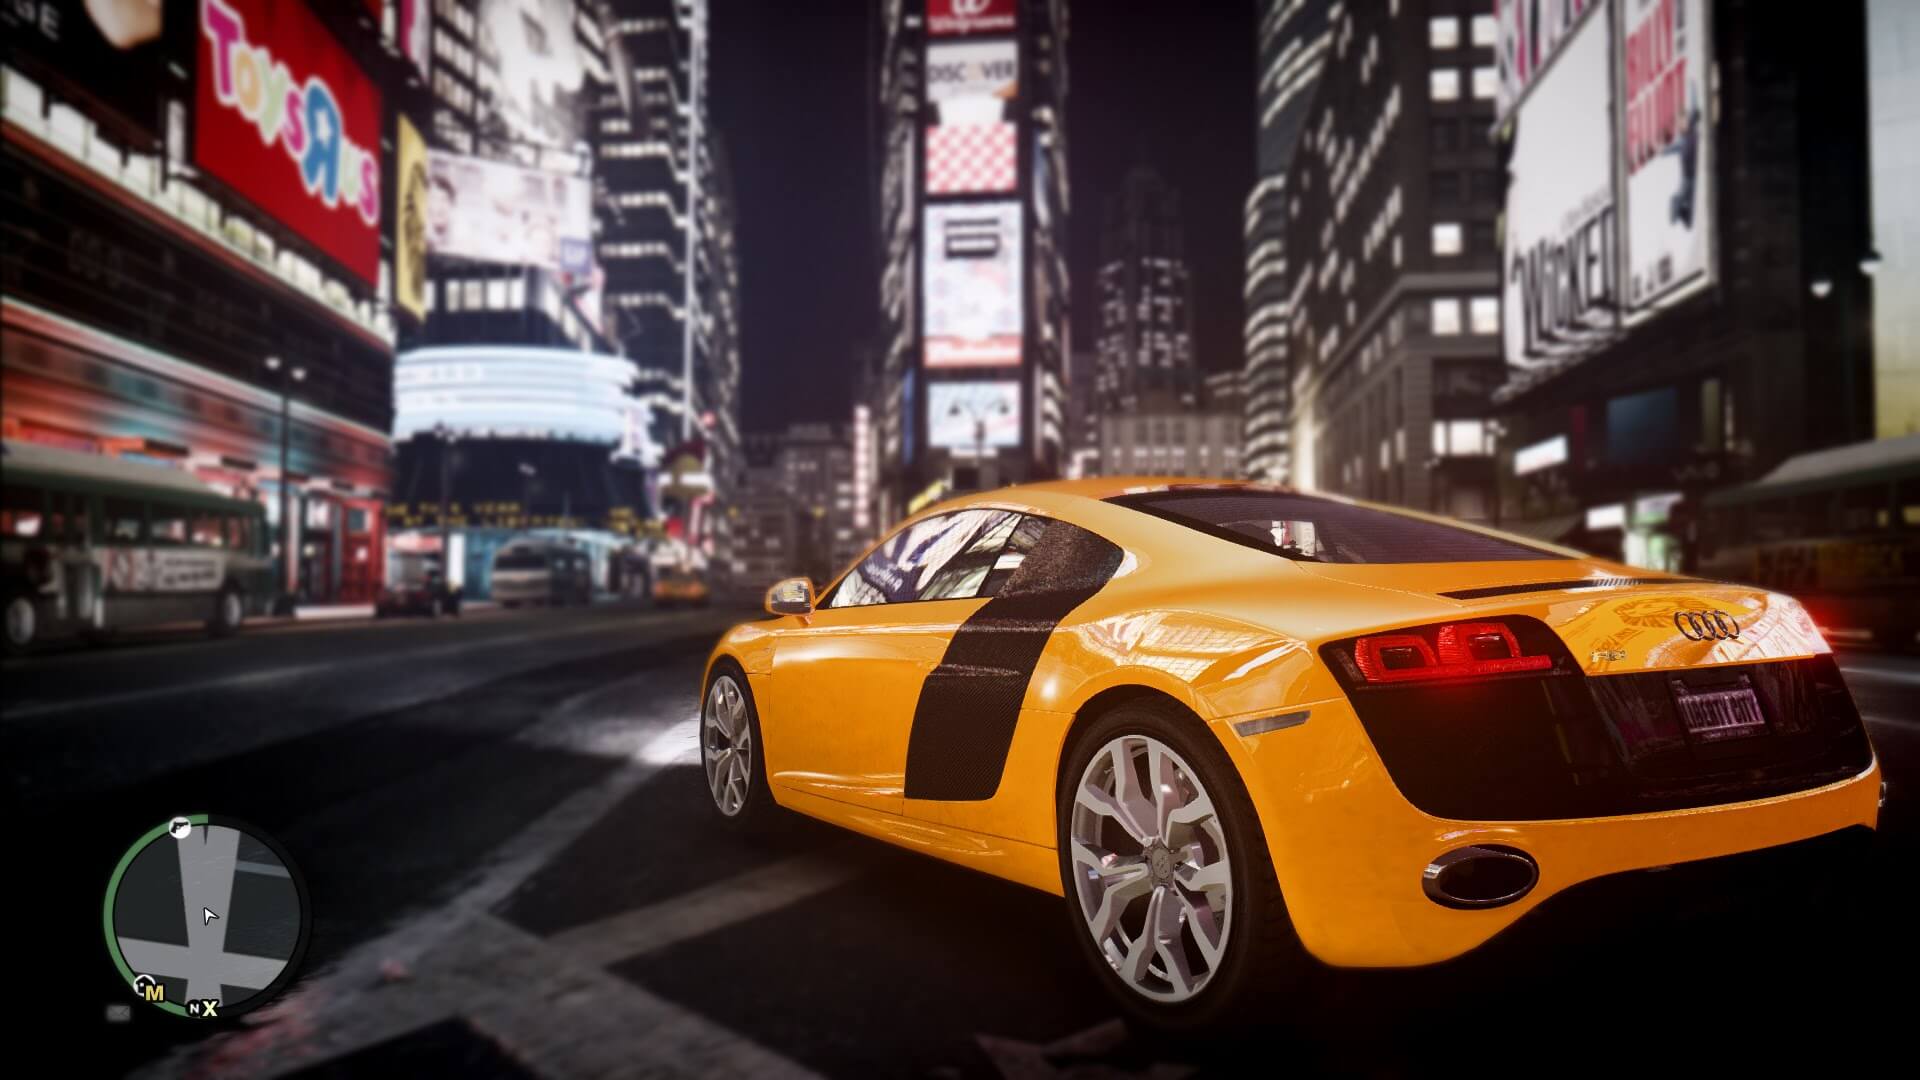 Grand Theft Auto V: Realistic graphic, Ray tracing Global Illumination